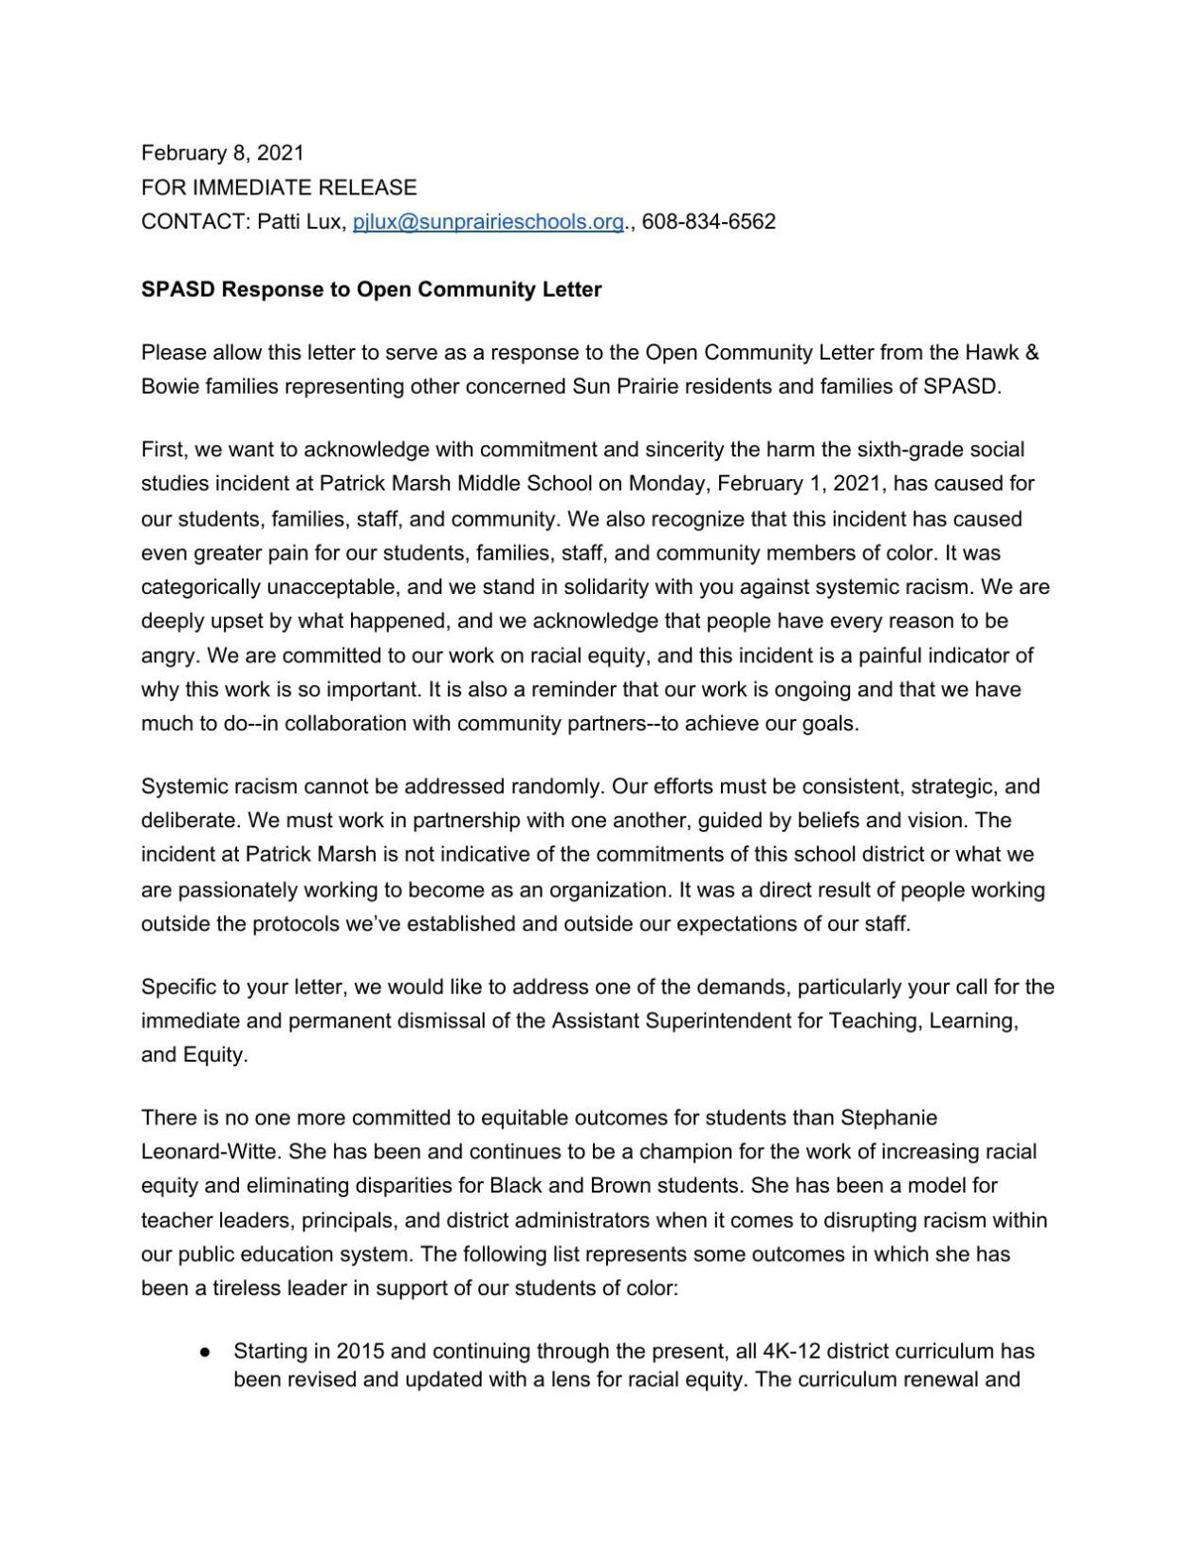 Sun Prairie School District response to open letter, Feb. 8, 2021